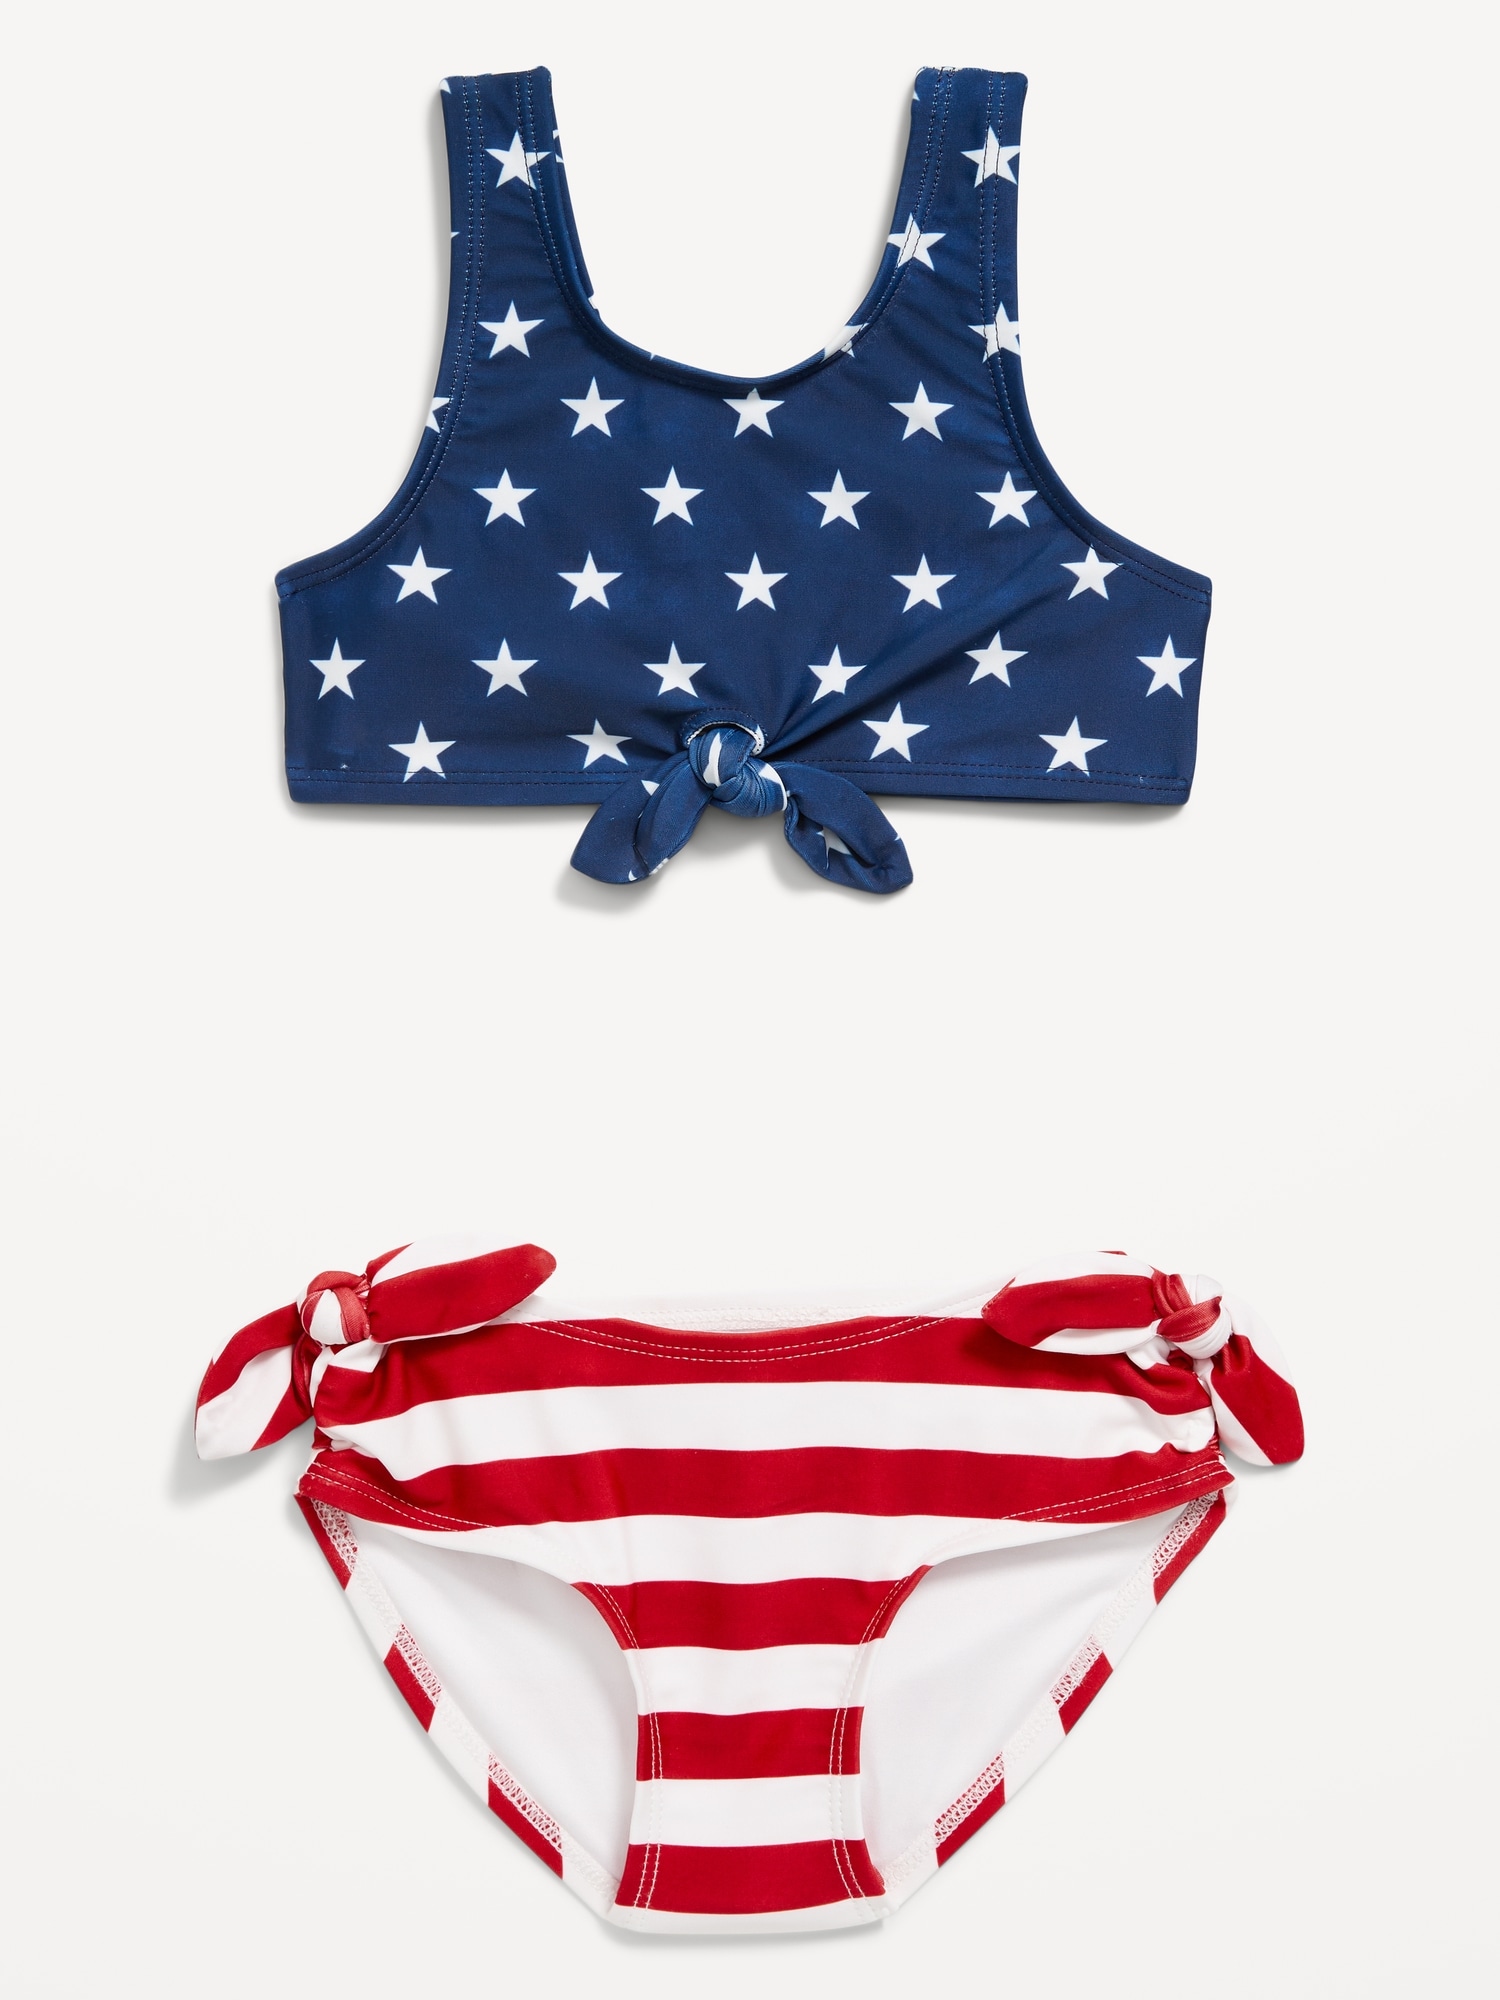 Americana Tie-Front Bikini Swim Set for Toddler Girls Hot Deal